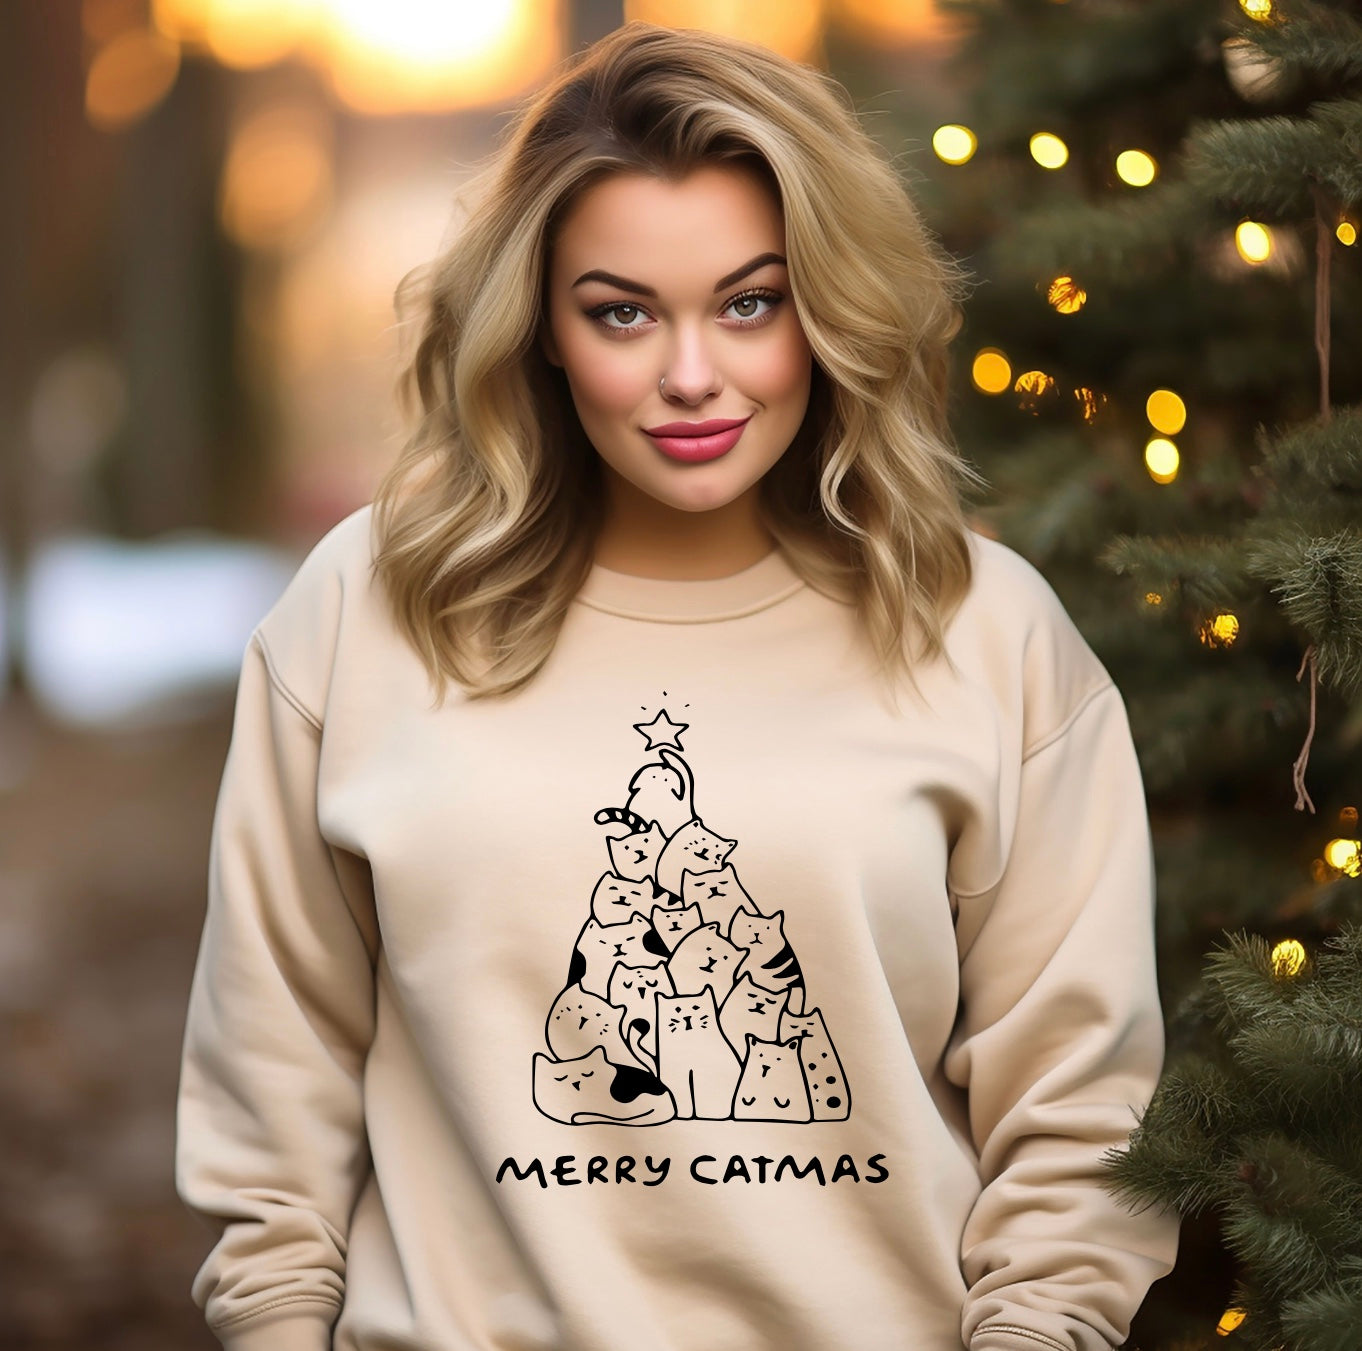 Merry Catmas unisex crewneck sweatshirt in sand with black graphic